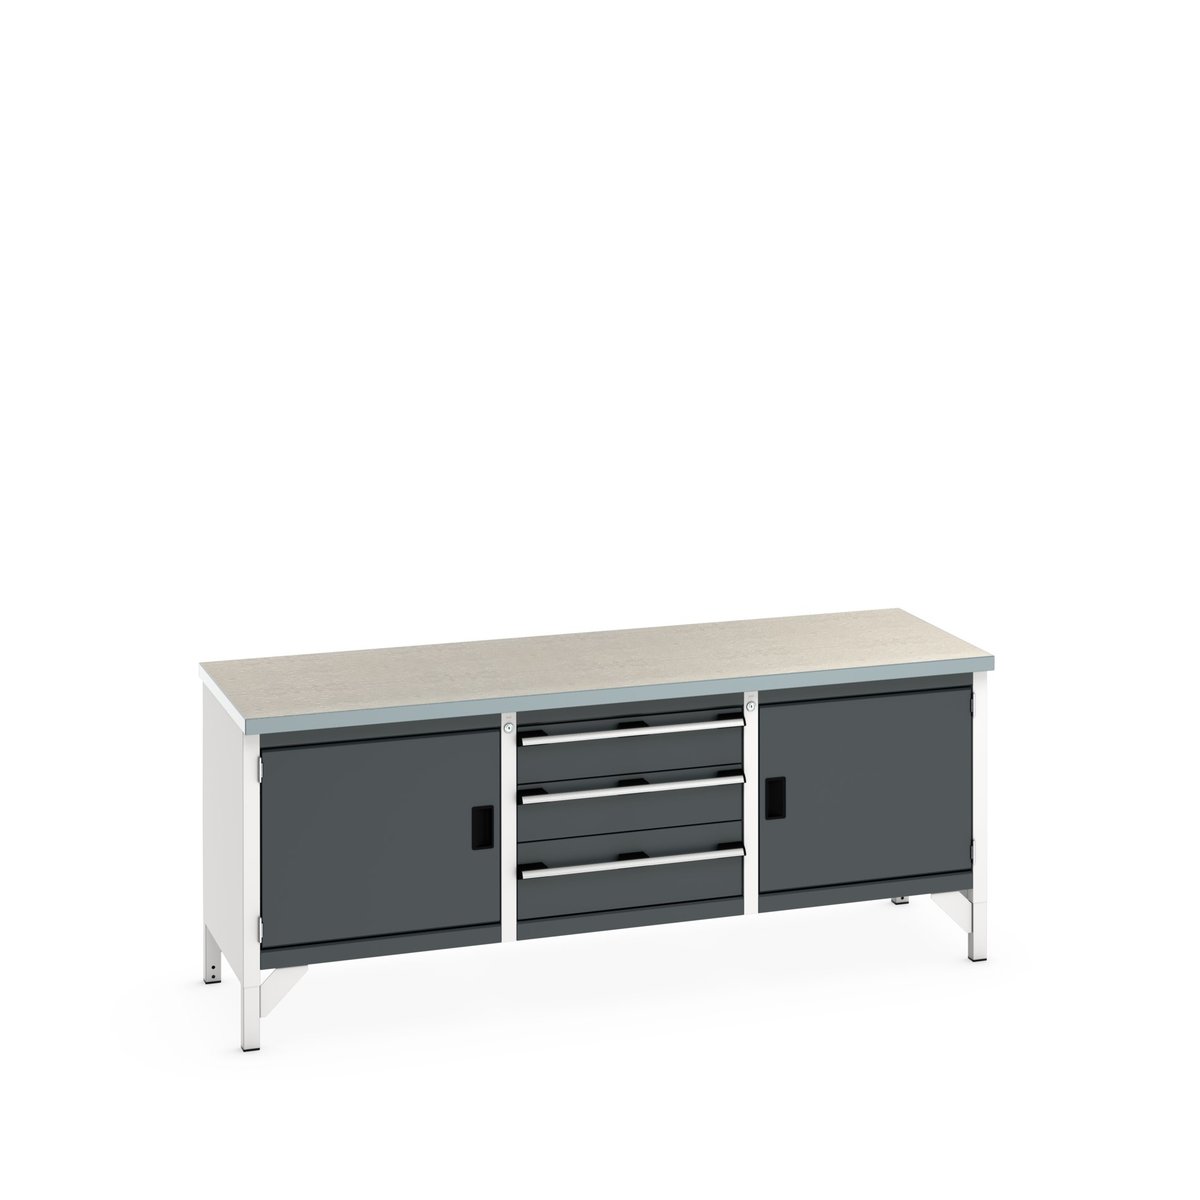 41002057. - cubio storage bench (lino)